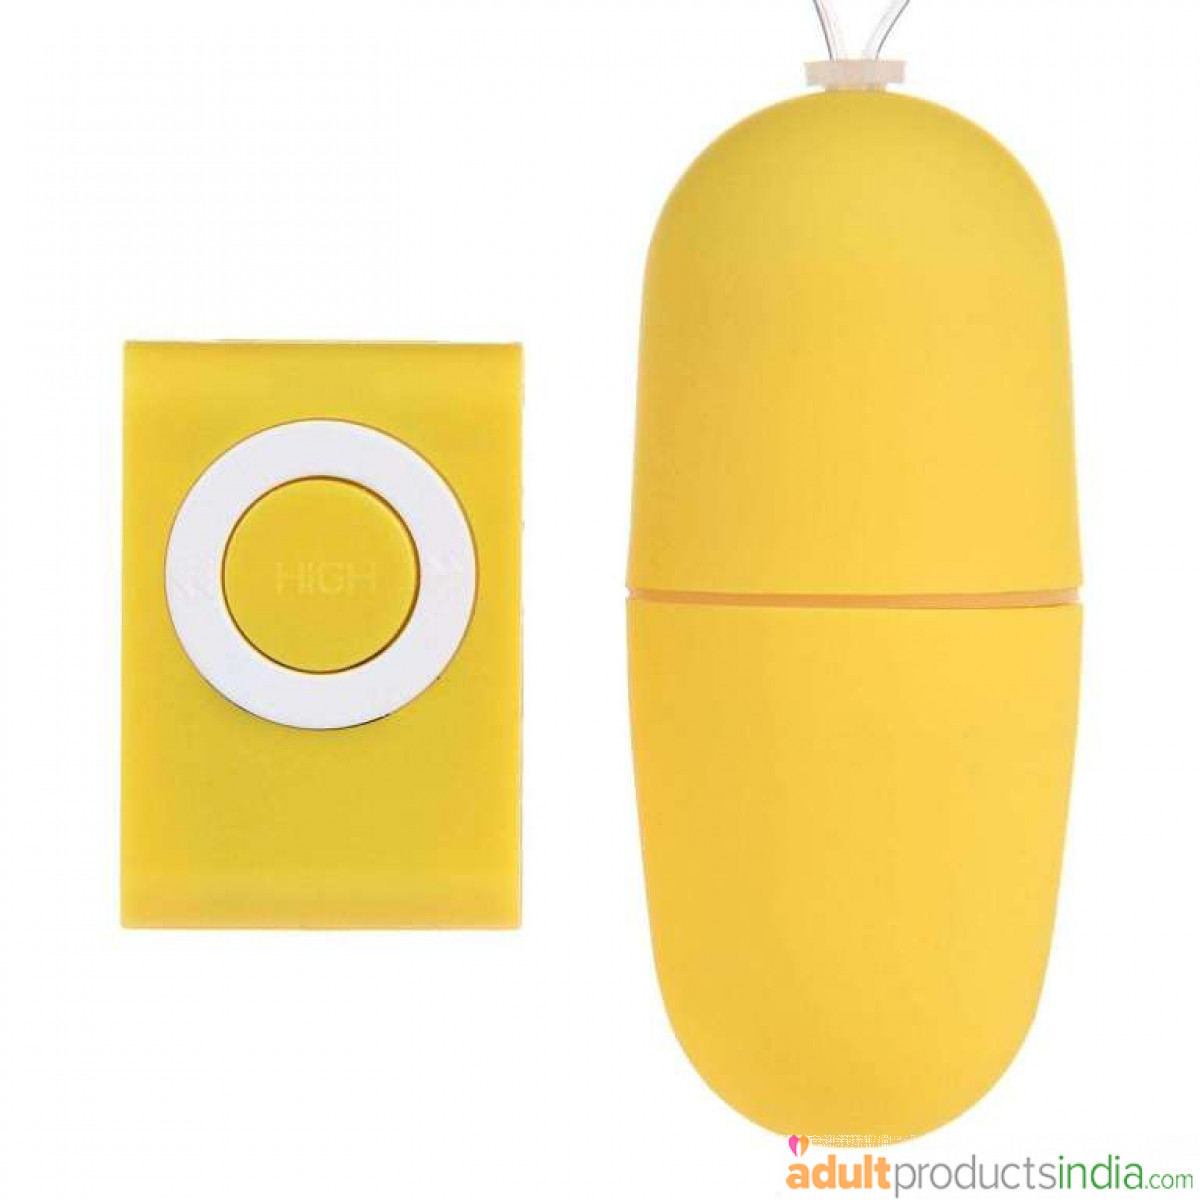 Remote Control Vibrating Egg - Yellow